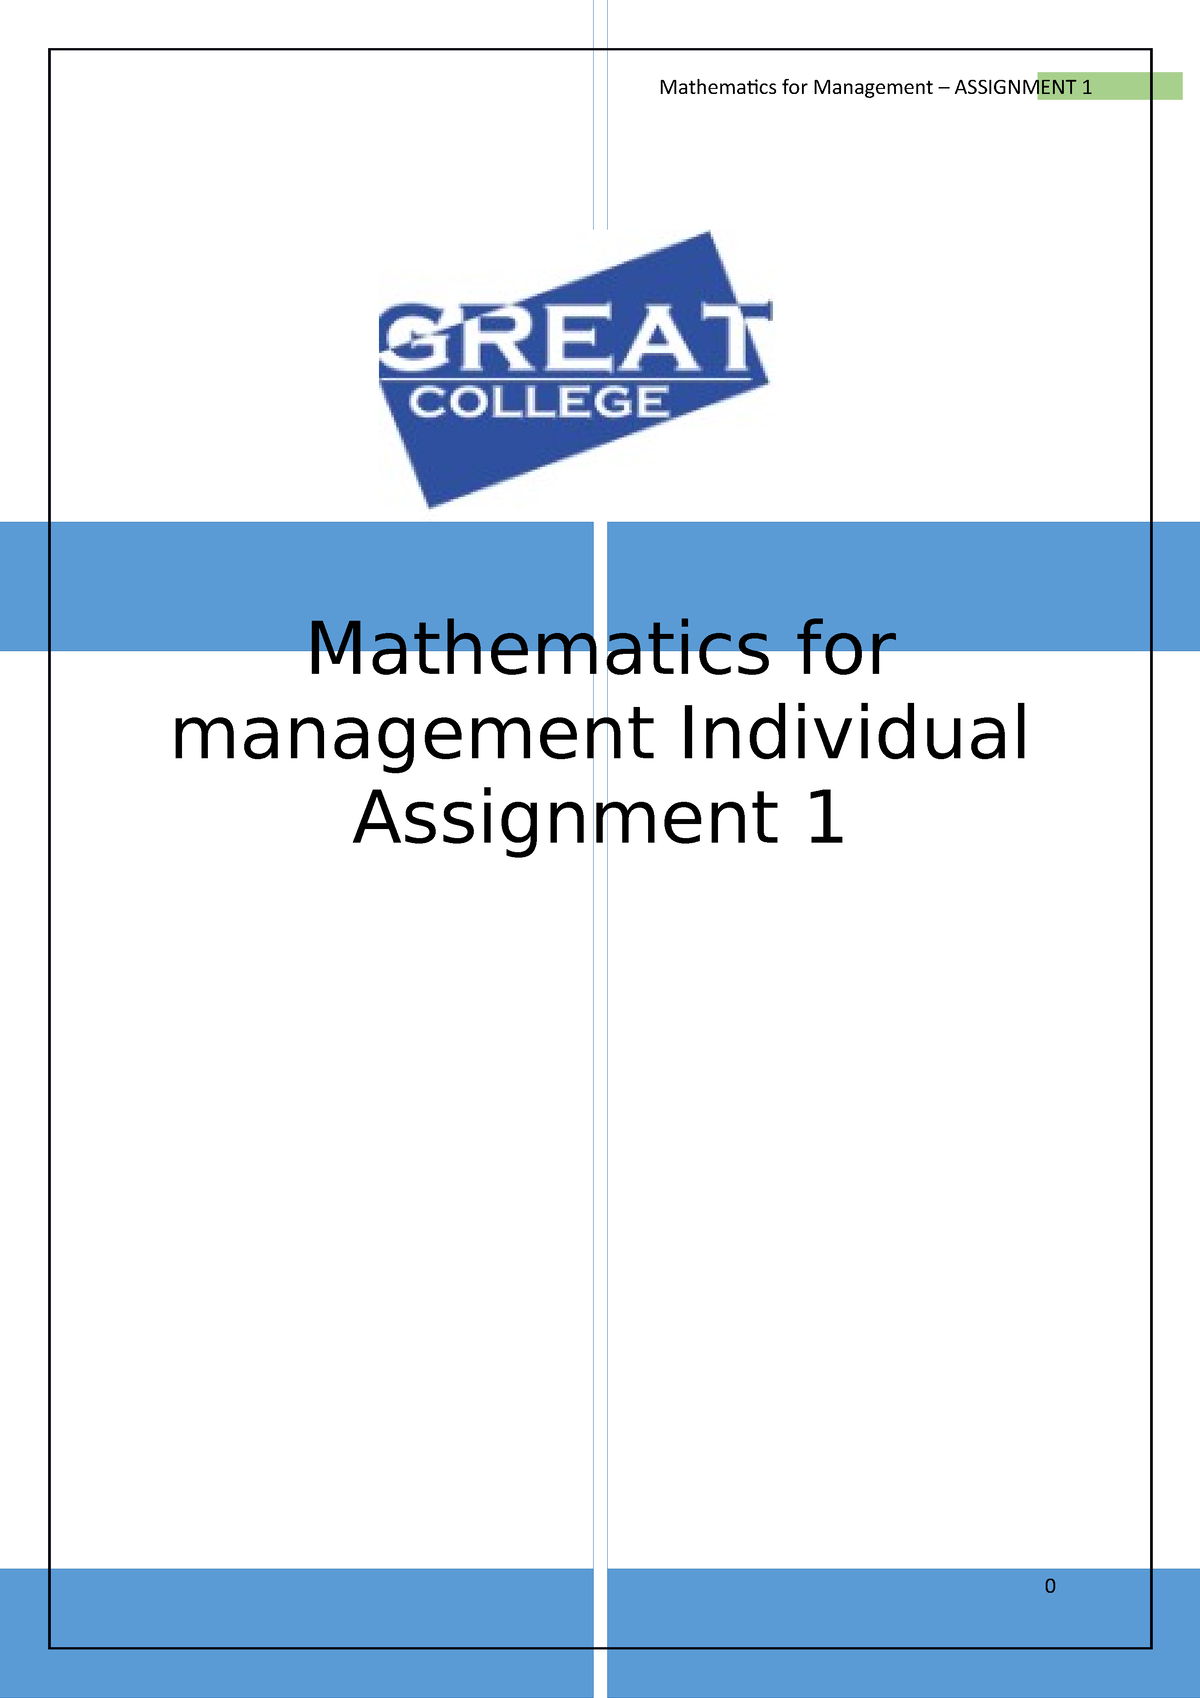 characteristics of mathematics assignment